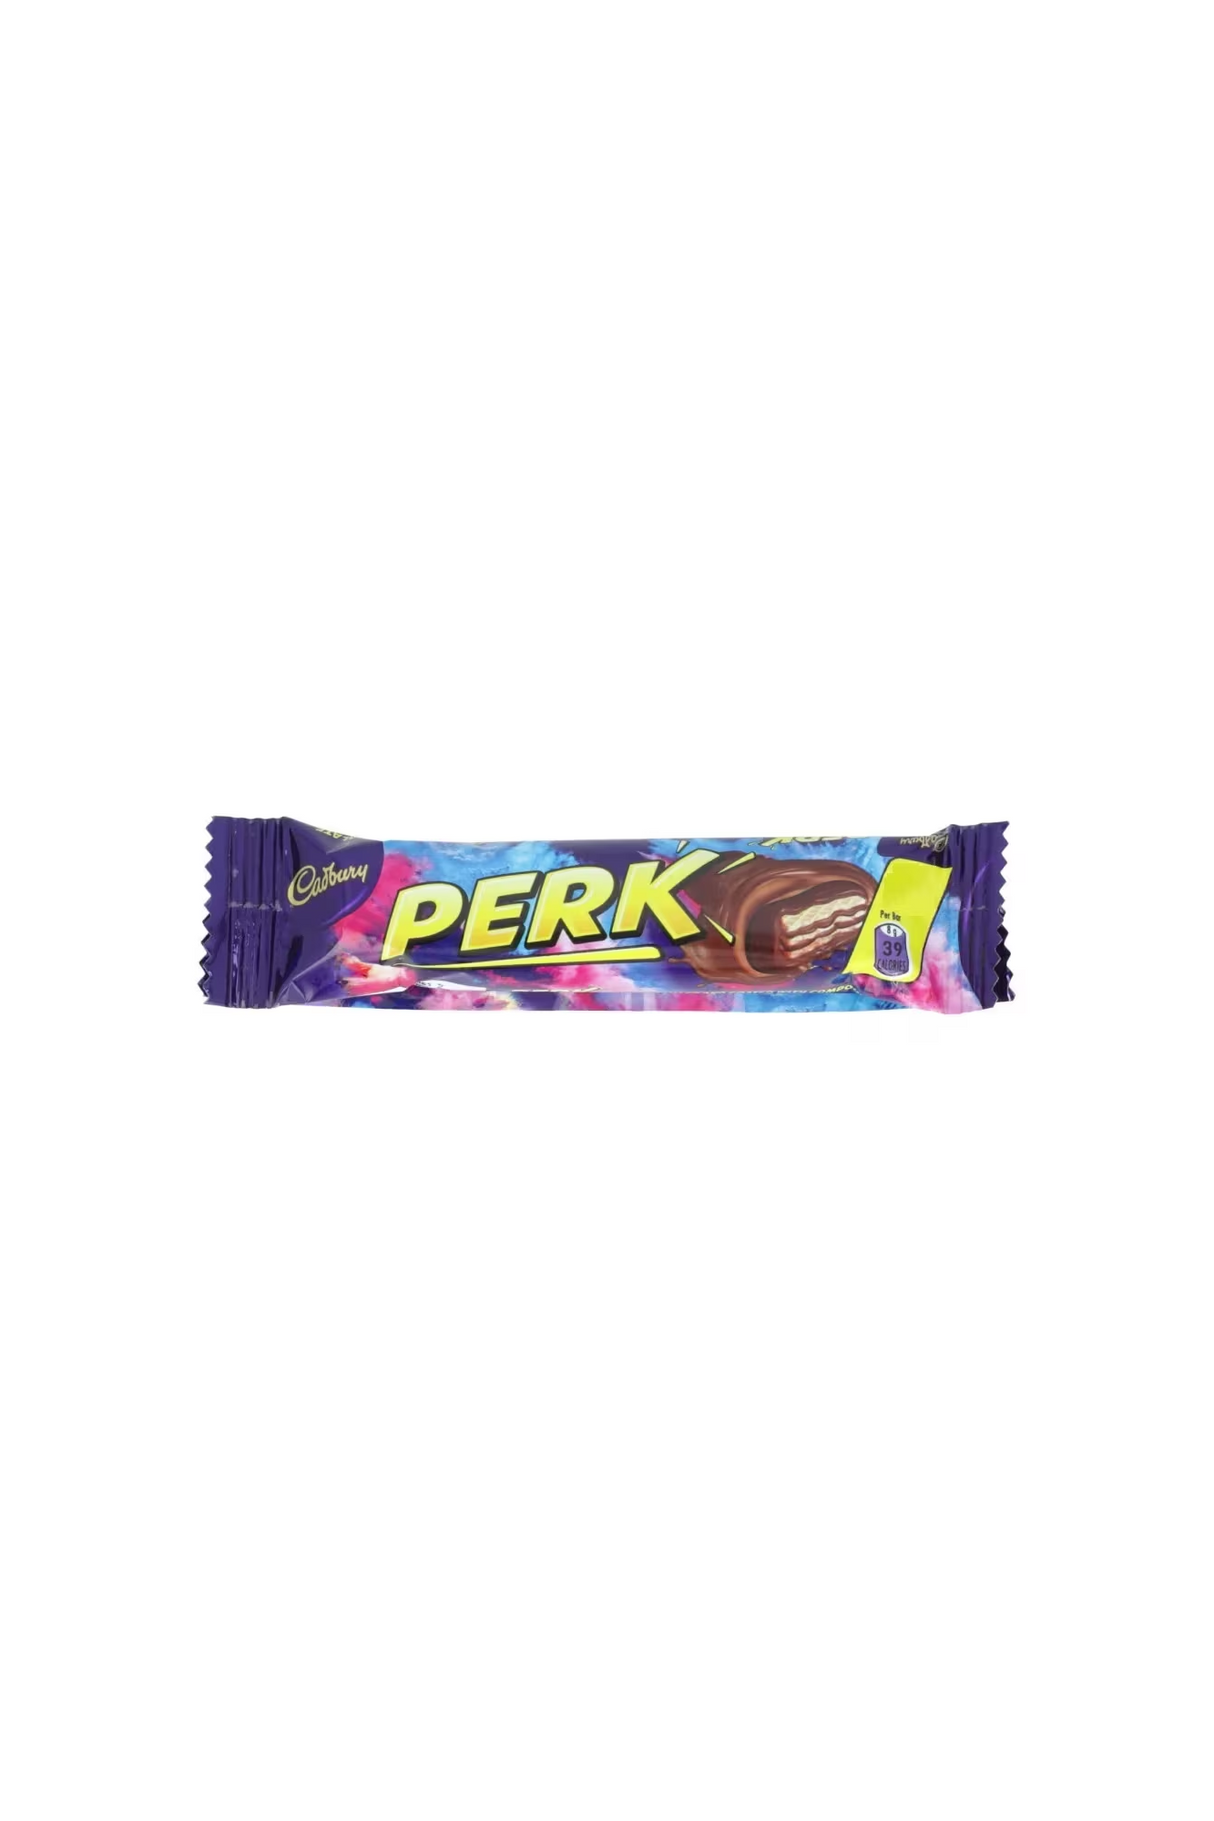 cadbury perk 8g